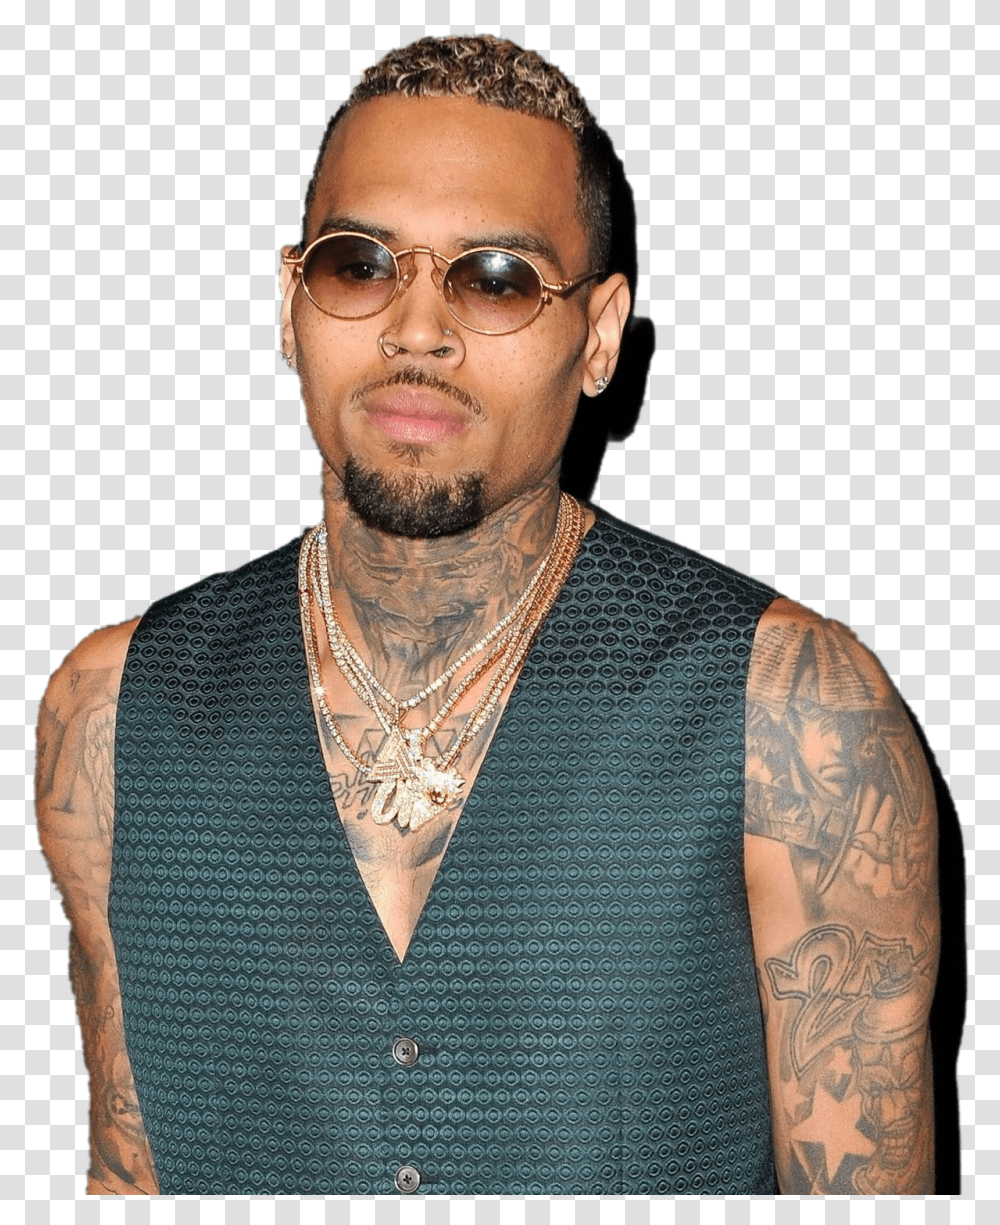 Chris Brown Background Image Chris Brown, Skin, Person, Human, Tattoo Transparent Png